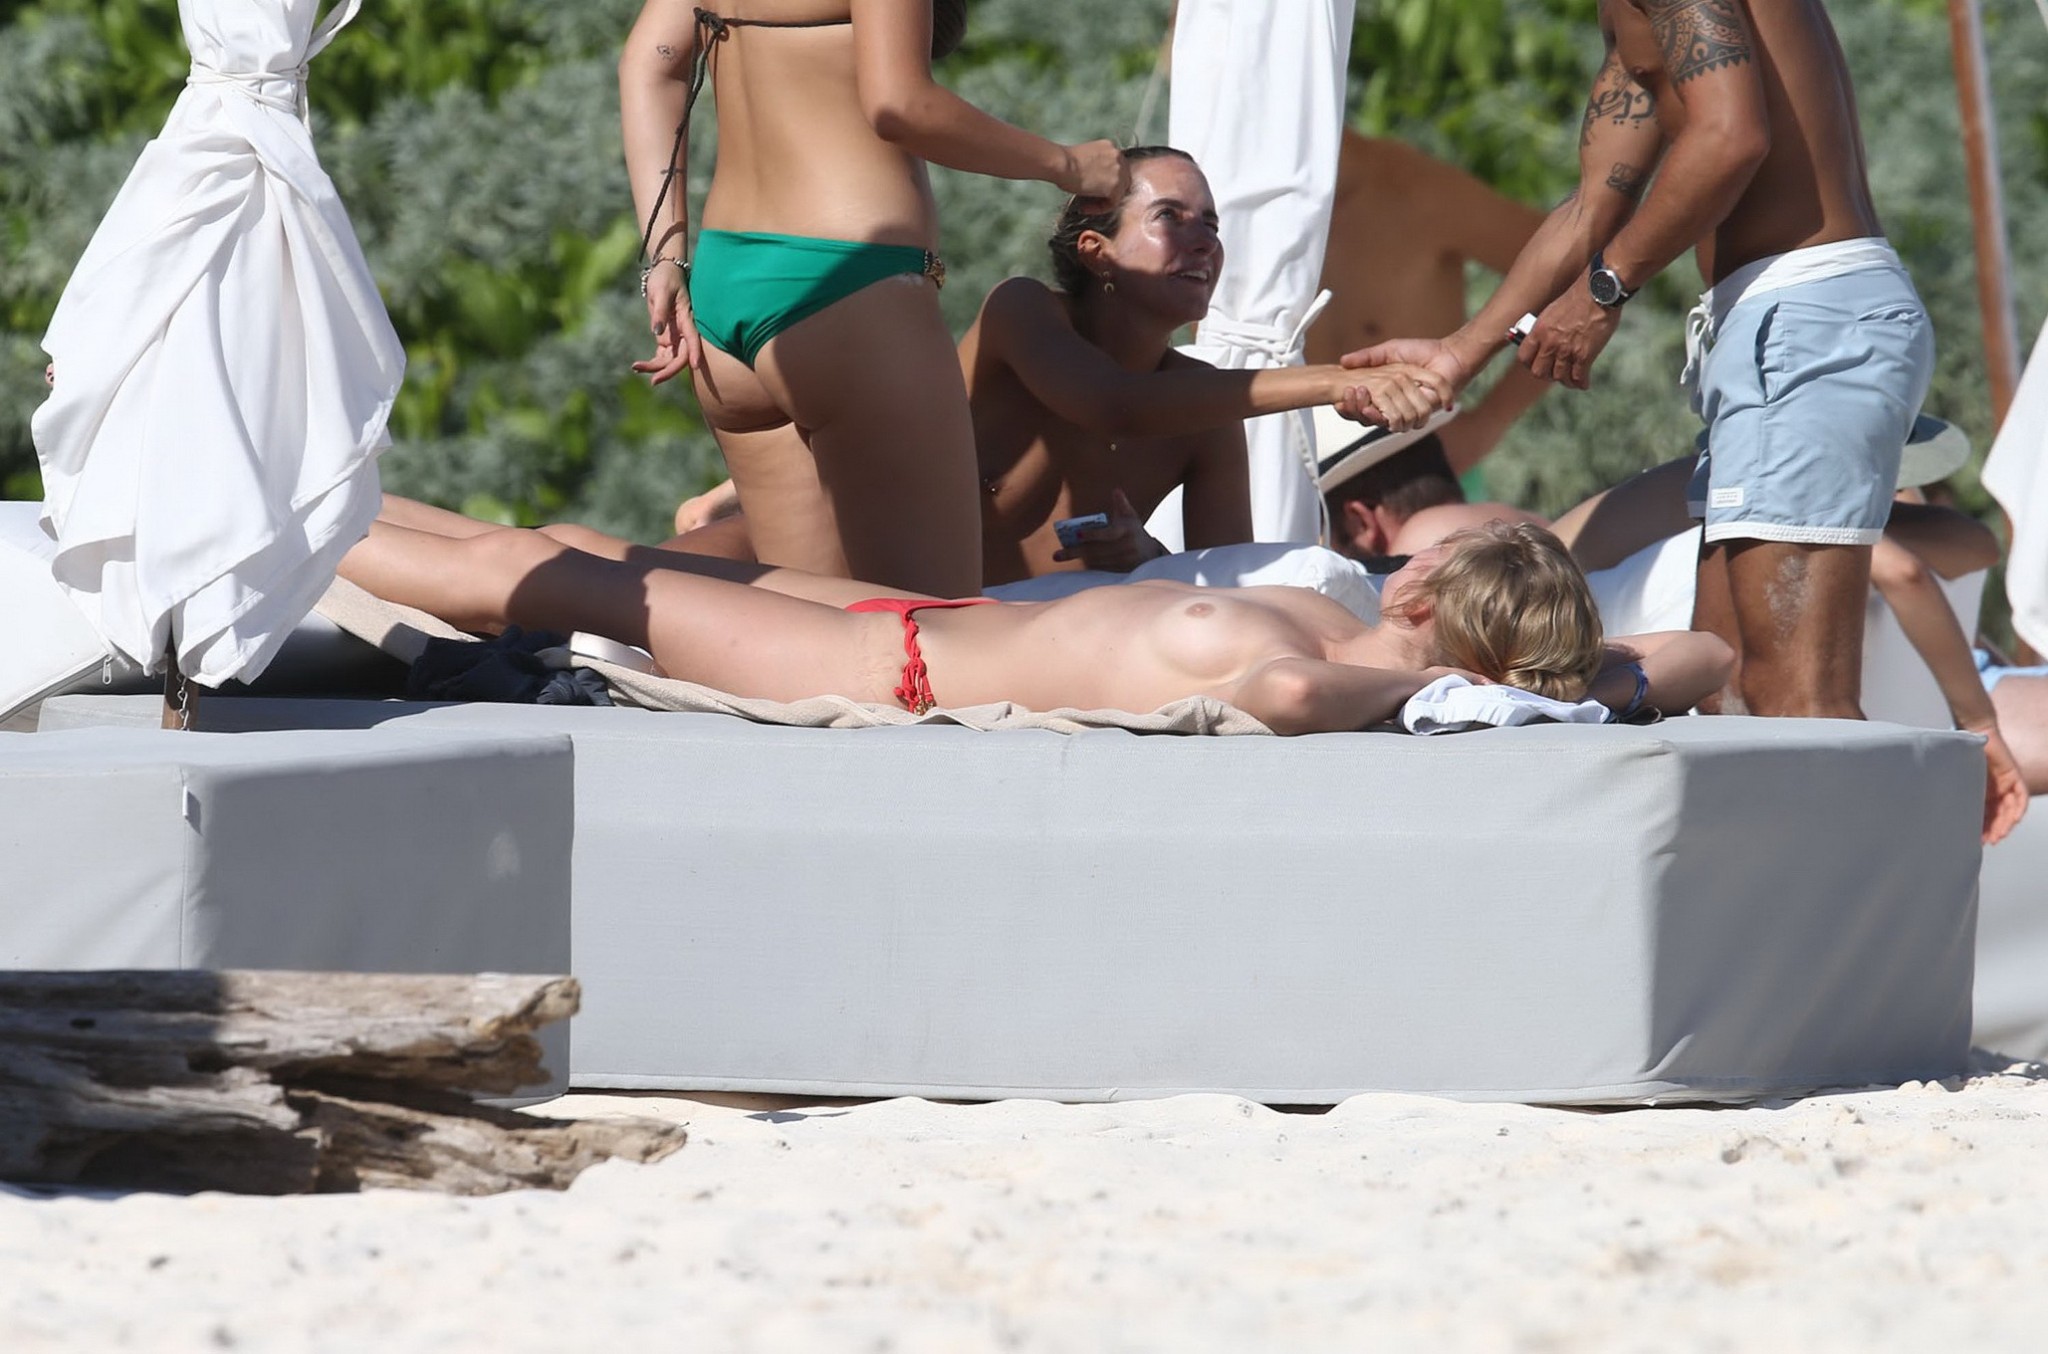 Toni garrn bronceando sus tetas desnudas en la playa de miami
 #75147599